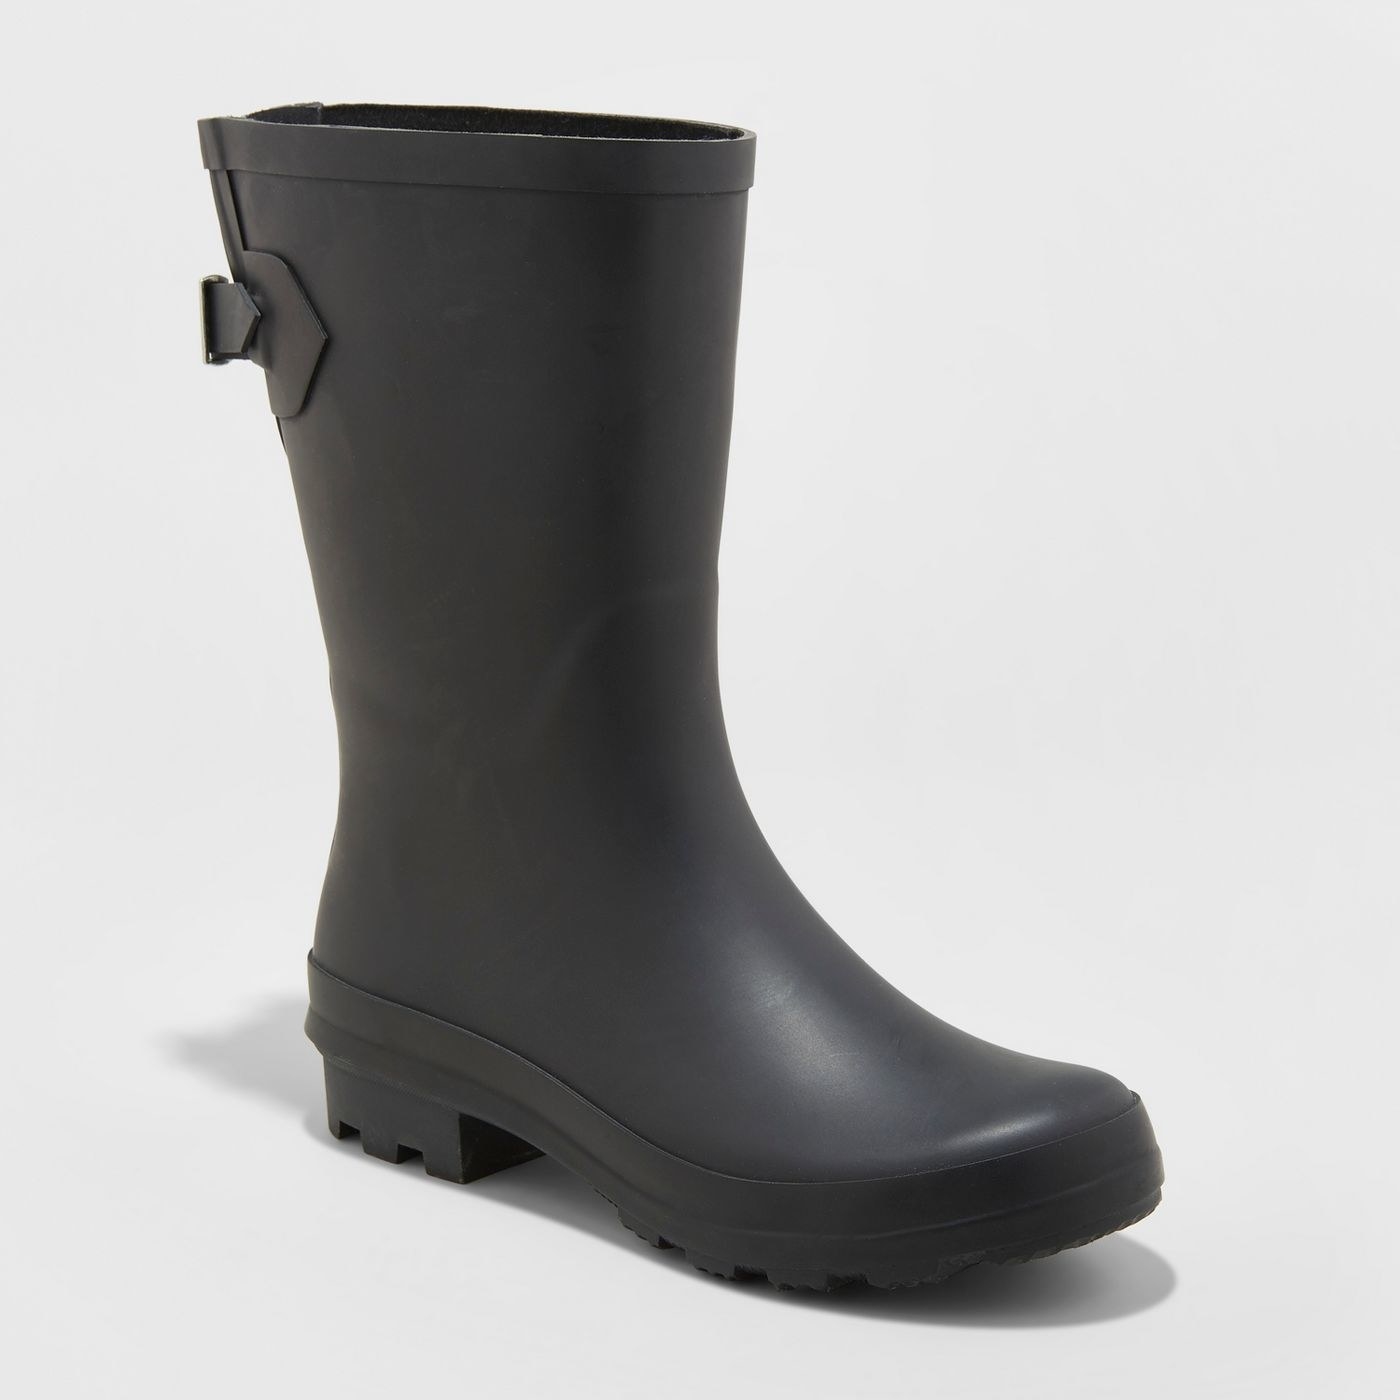 A black matte mid calf rain boot